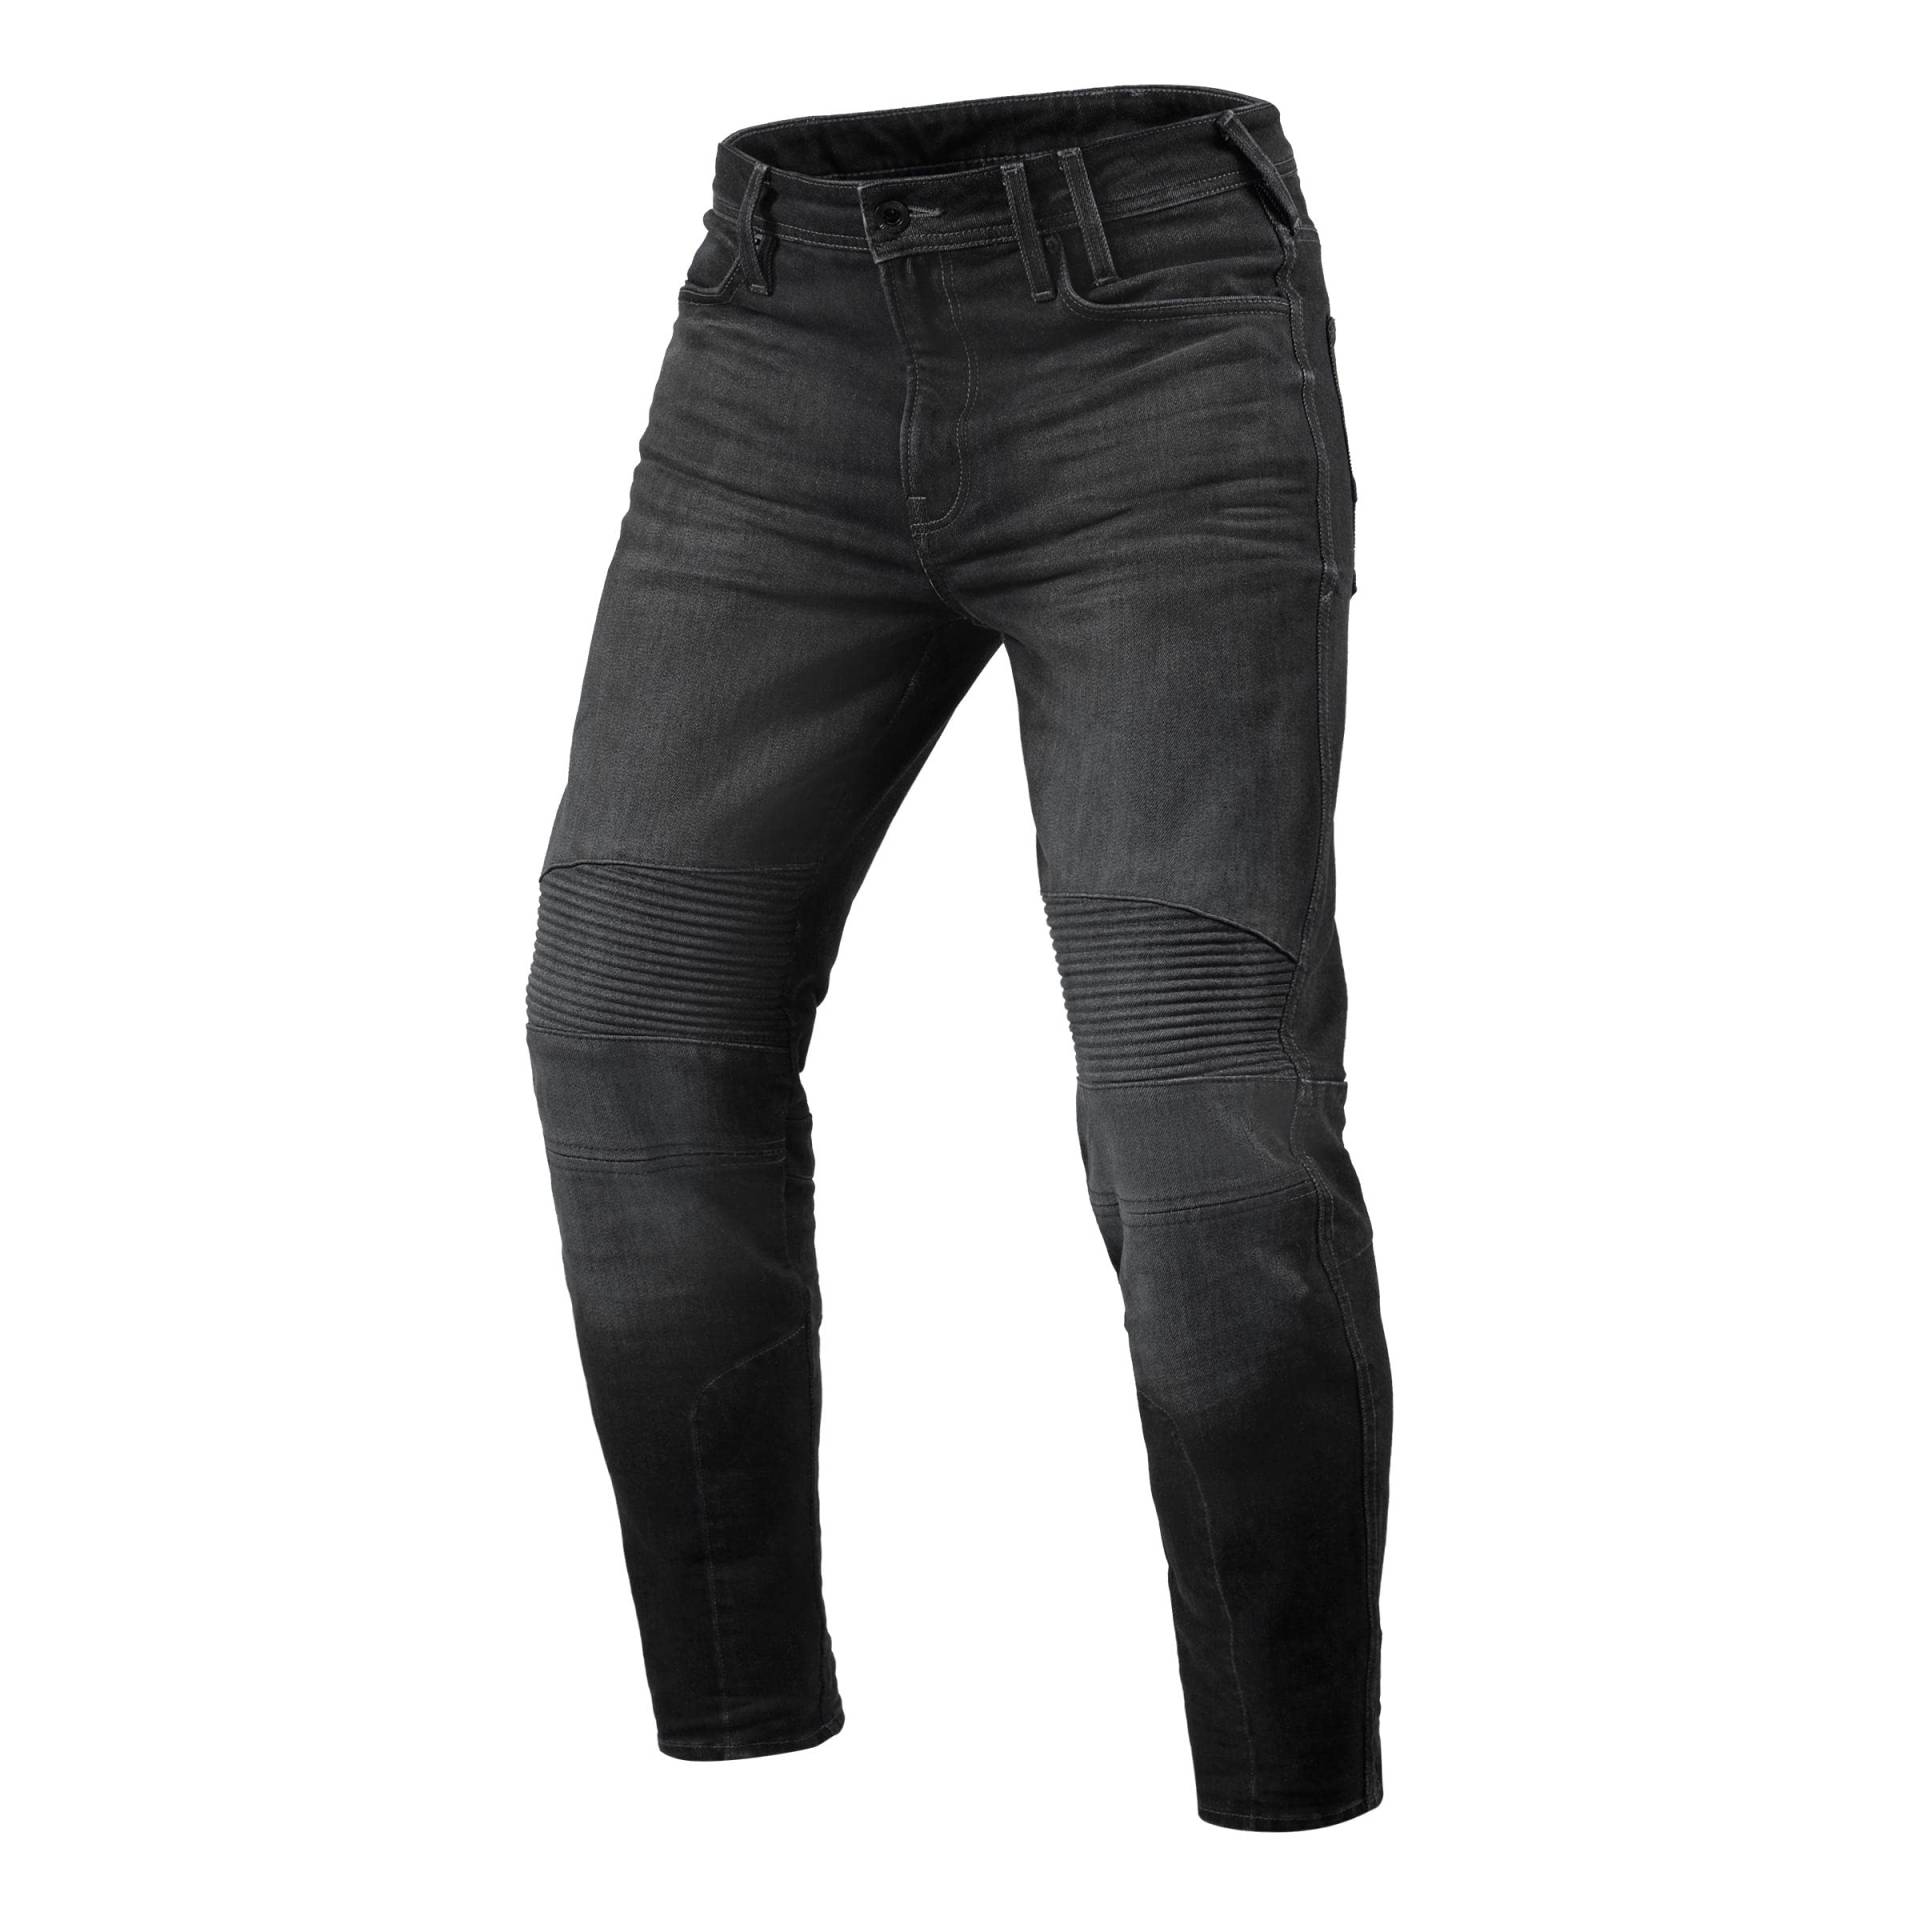 Revit Moto 2 TF Motorrad Jeans (Black,32) von Revit